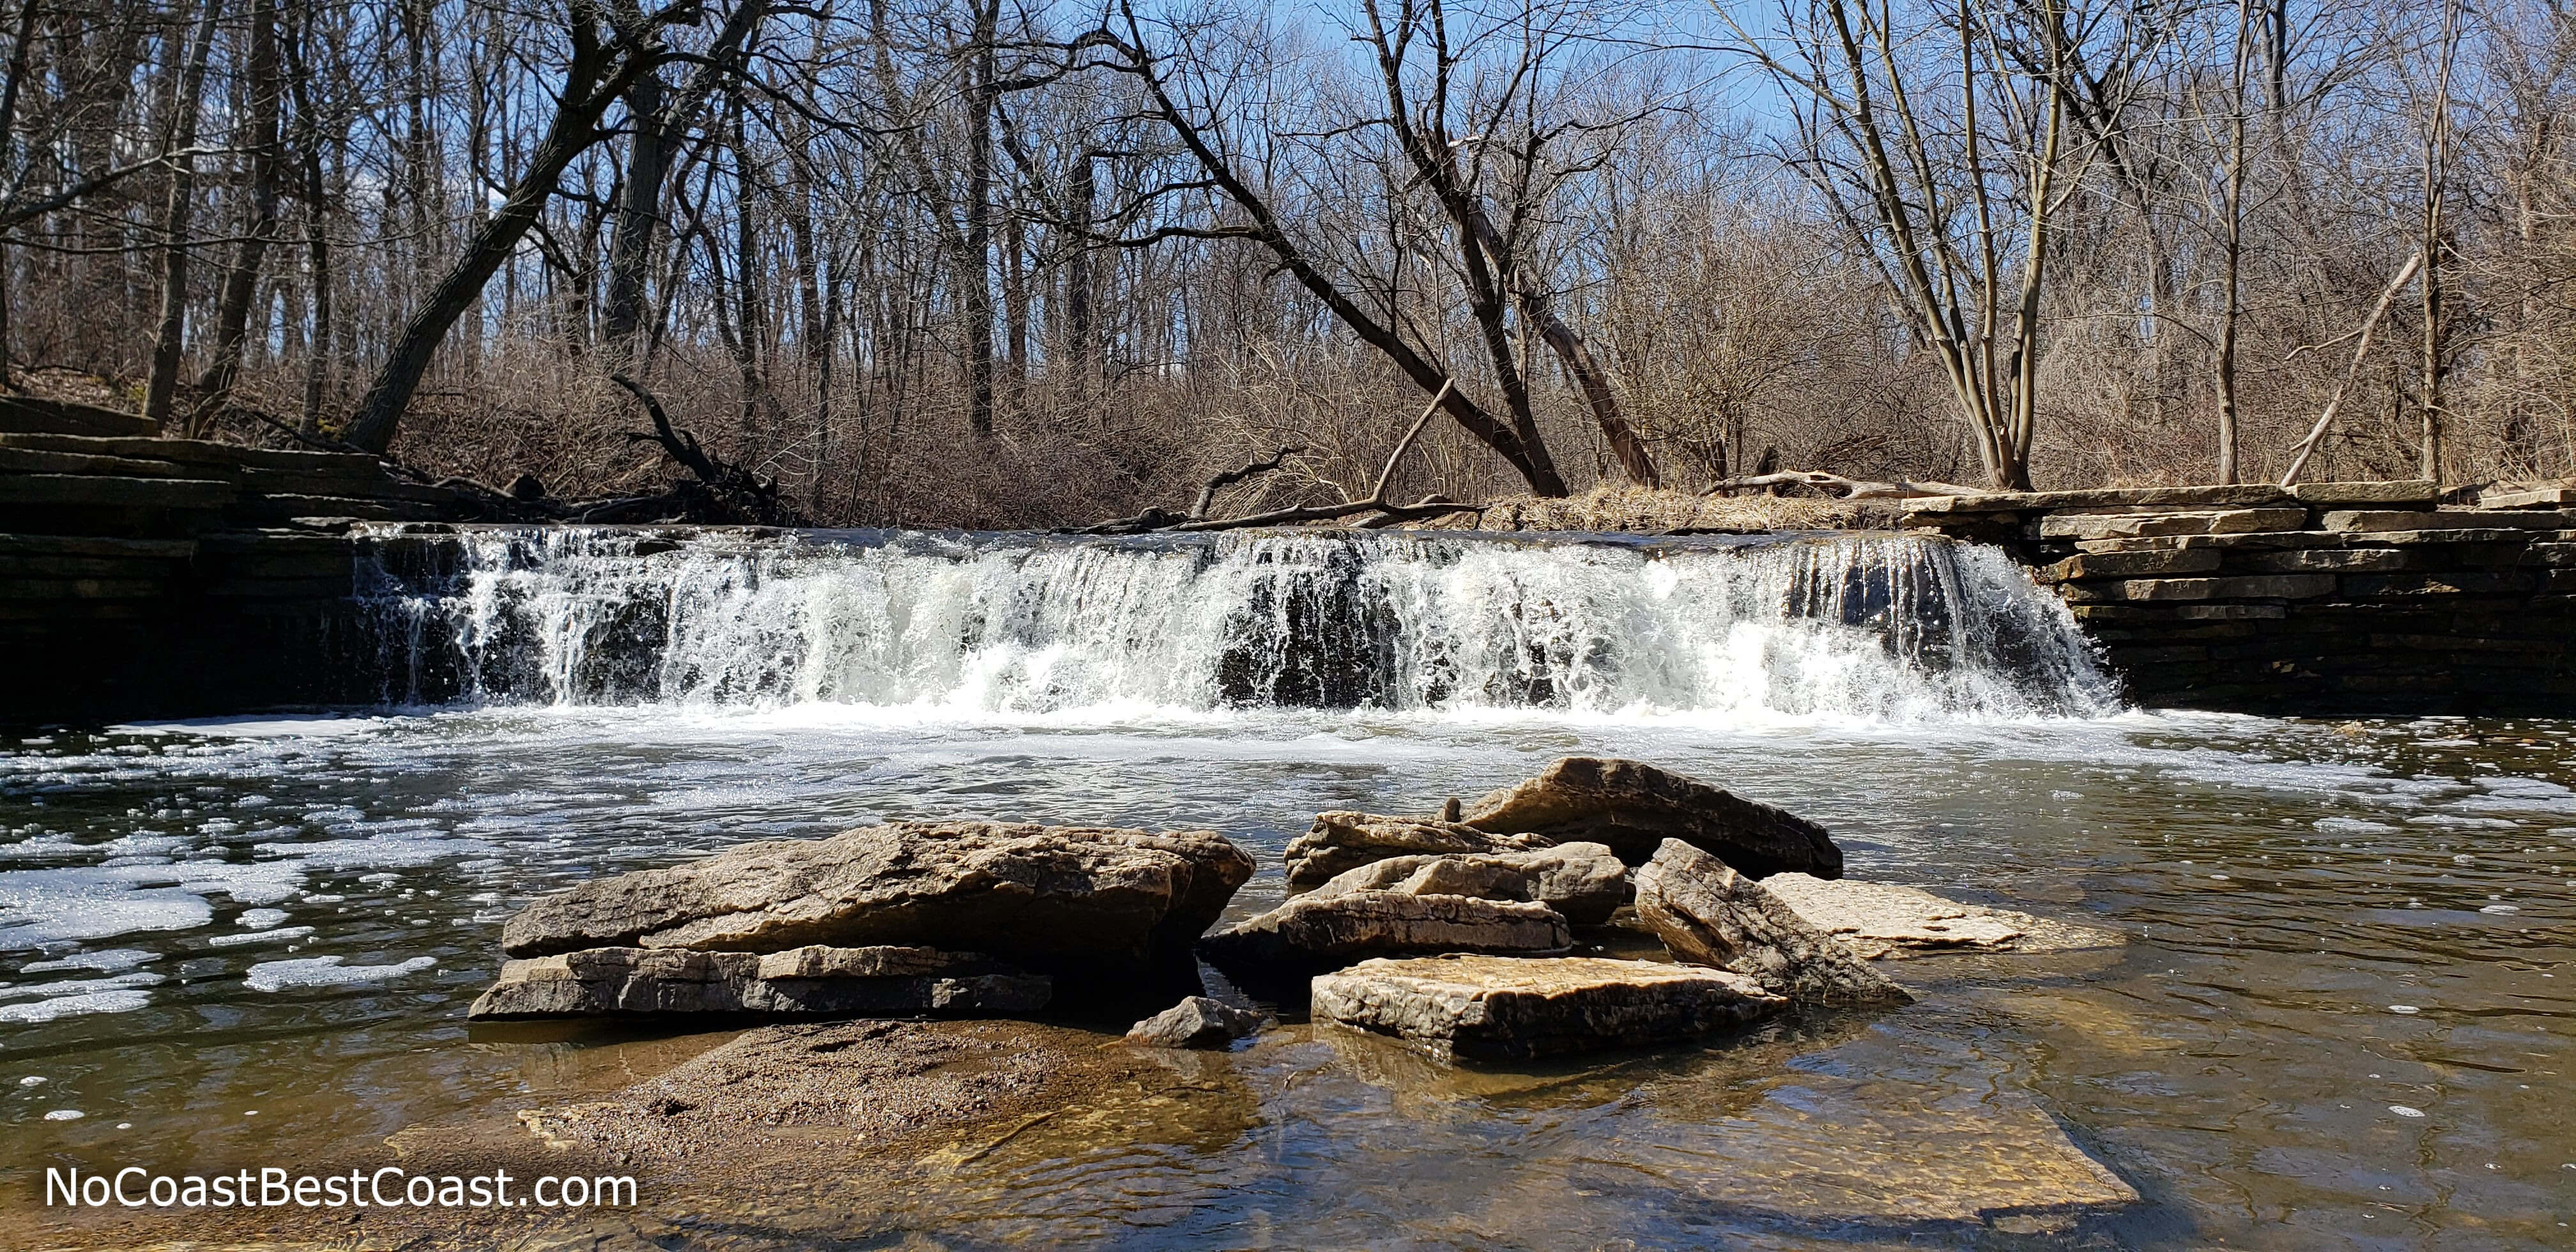 The man-made Rocky Glen Waterfall